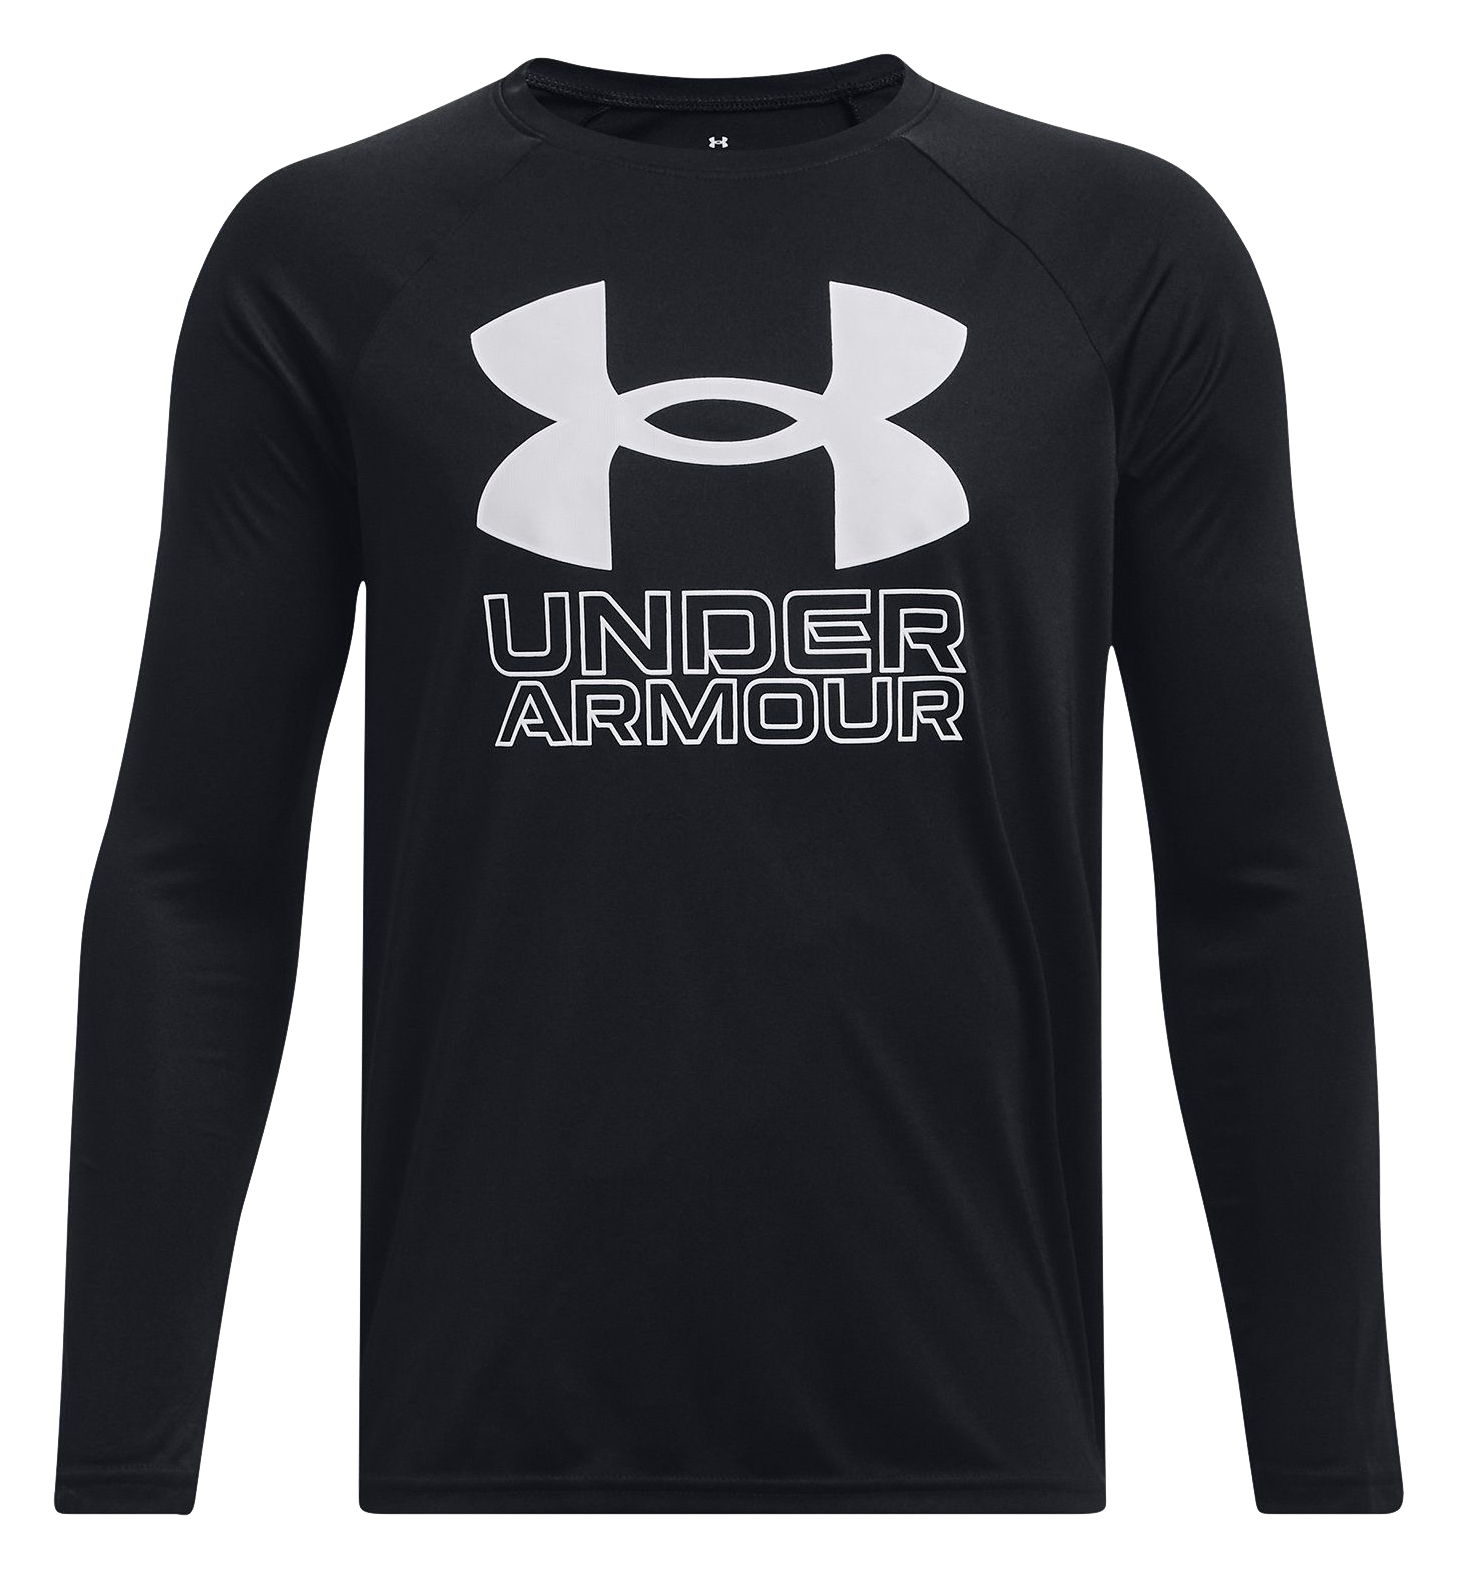 Under Armour Tech Hybrid Print Fill Long-Sleeve T-Shirt for Boys - Black/White - S